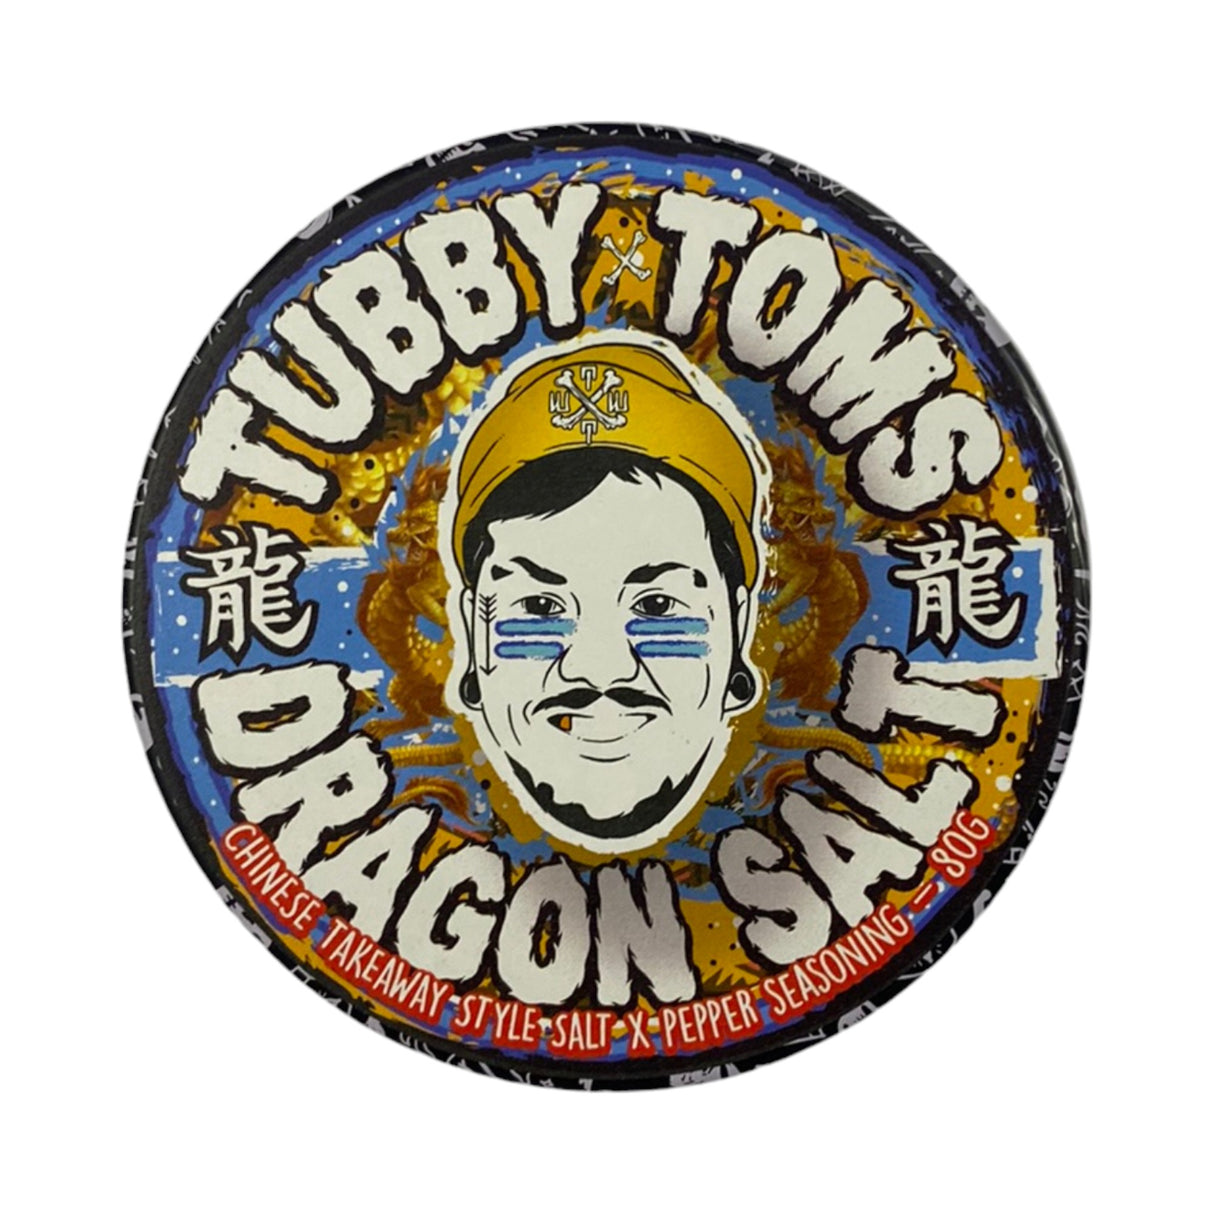 Tubby Toms - Dragon Salt - Chinese Salt x Pepper Style Seasoning Tin 60g